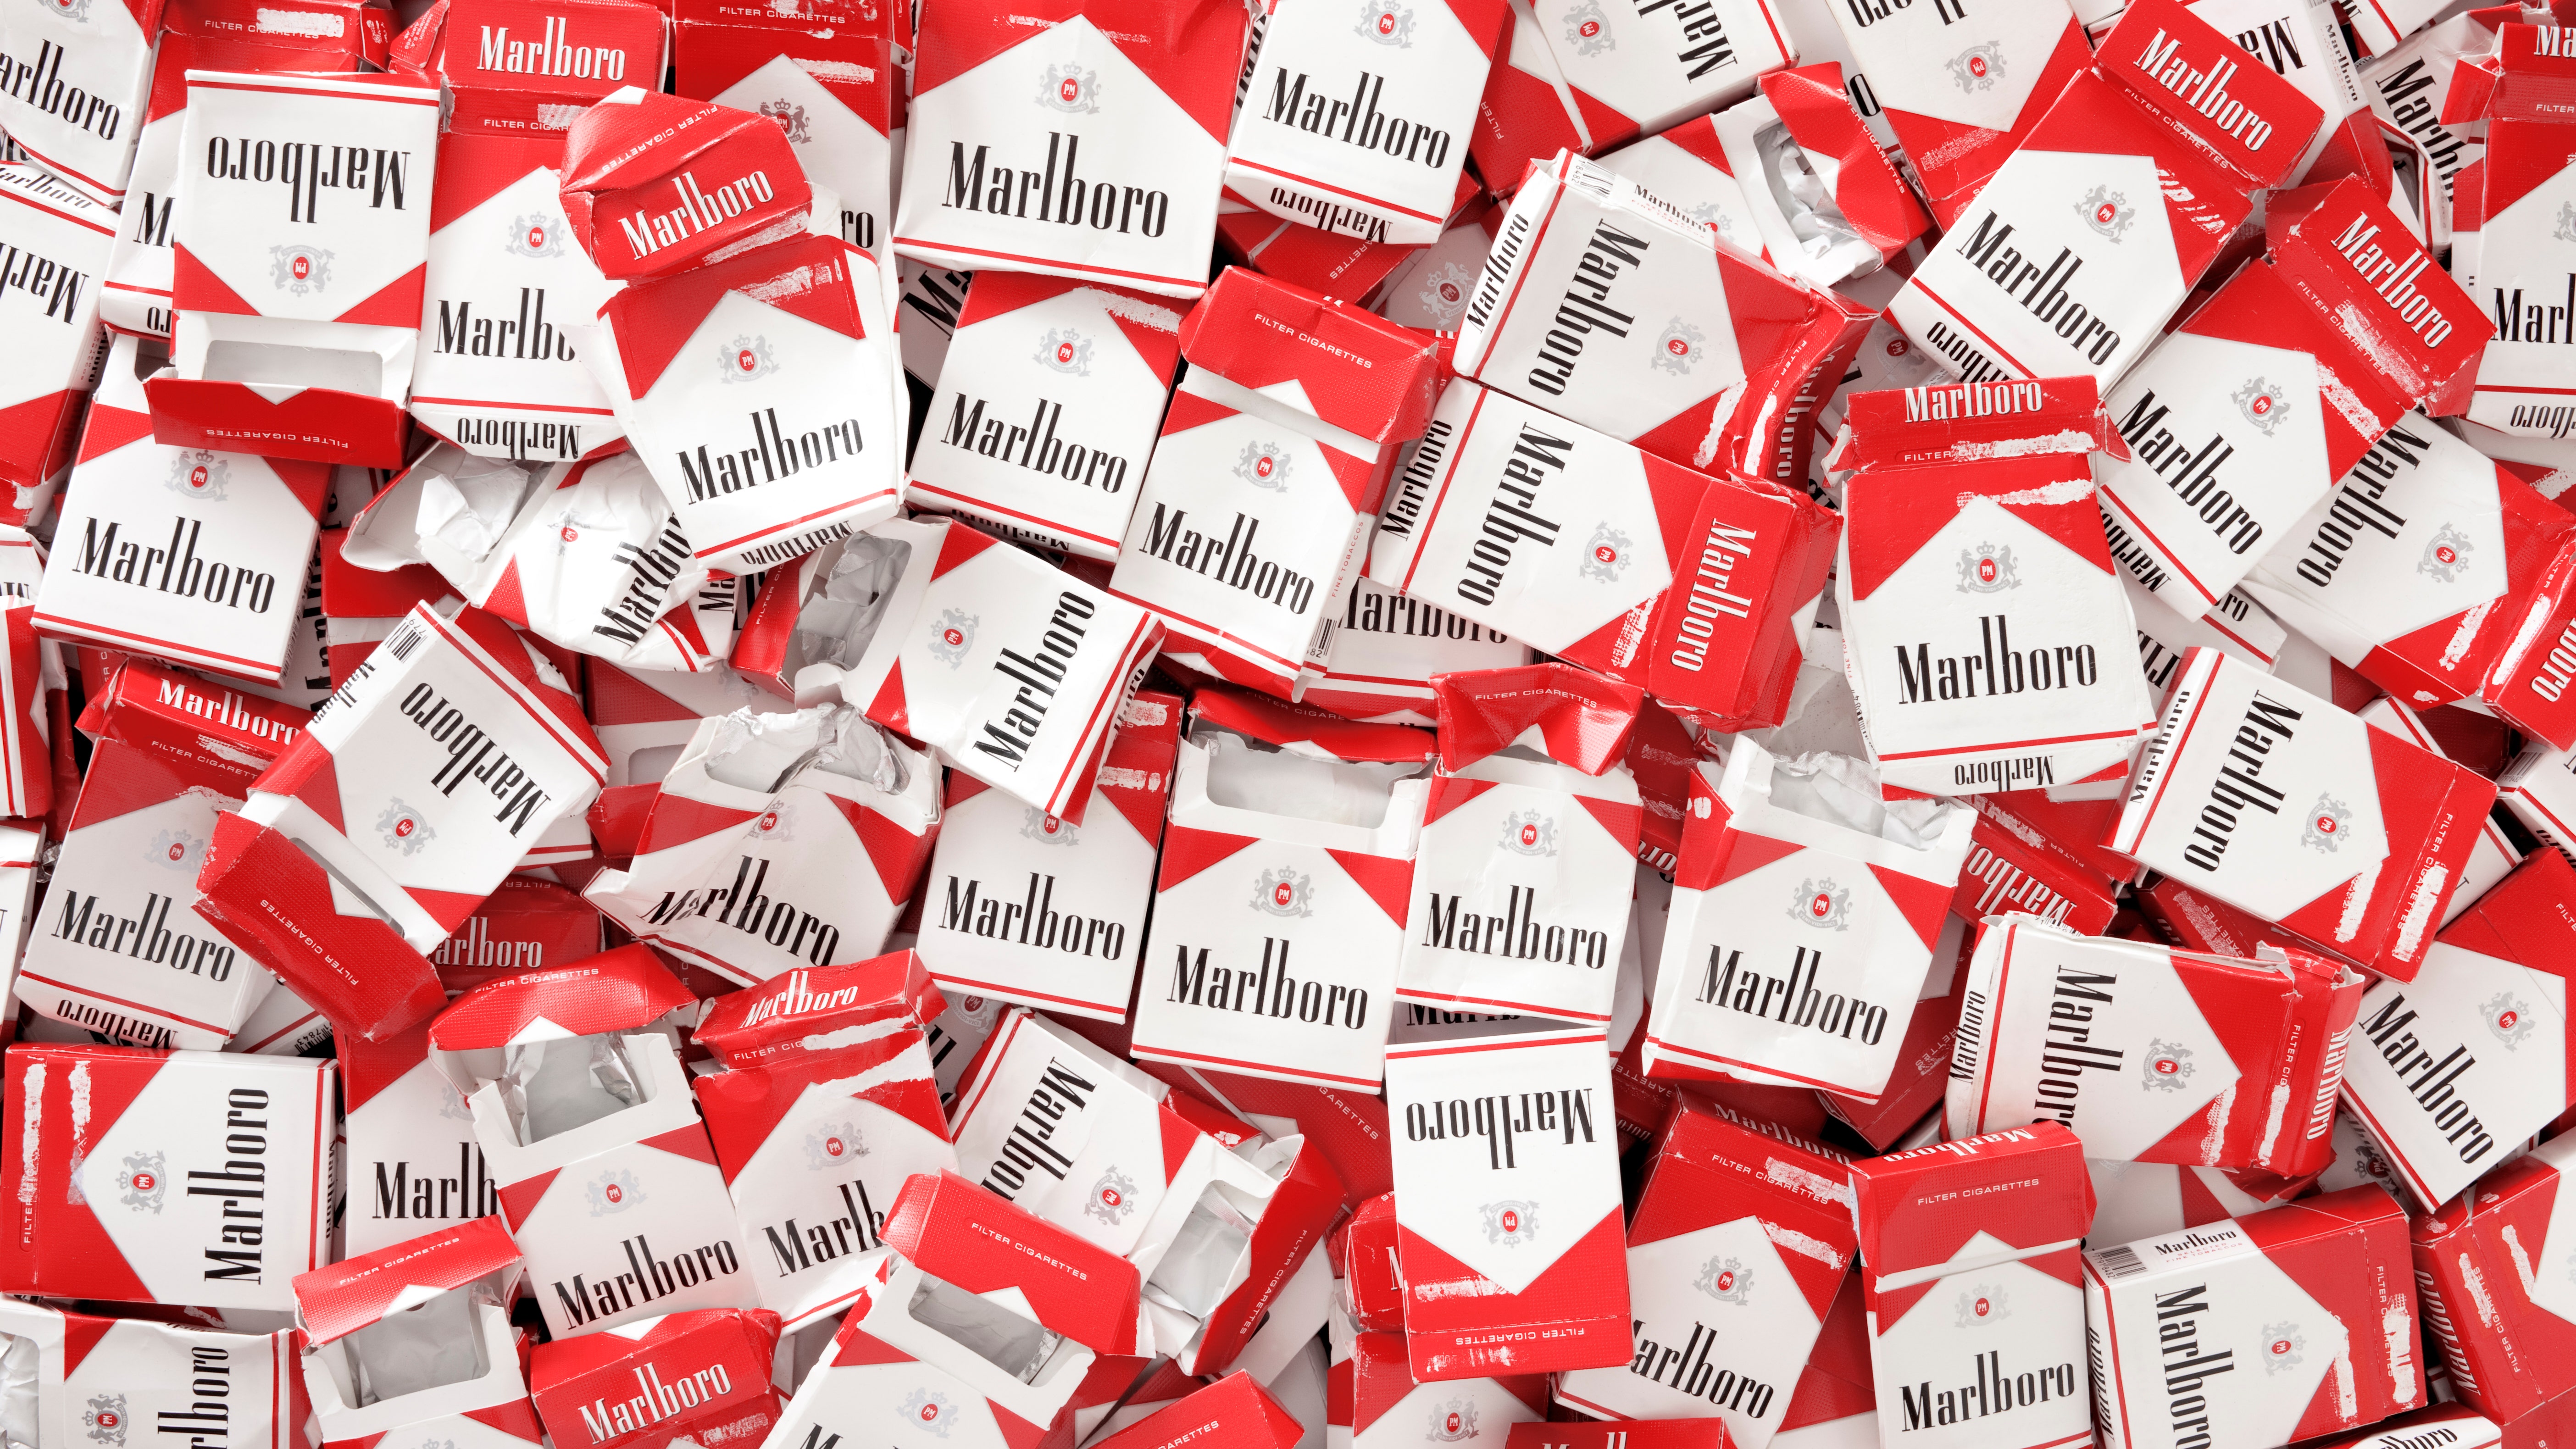 marlboro weed cigarettes price